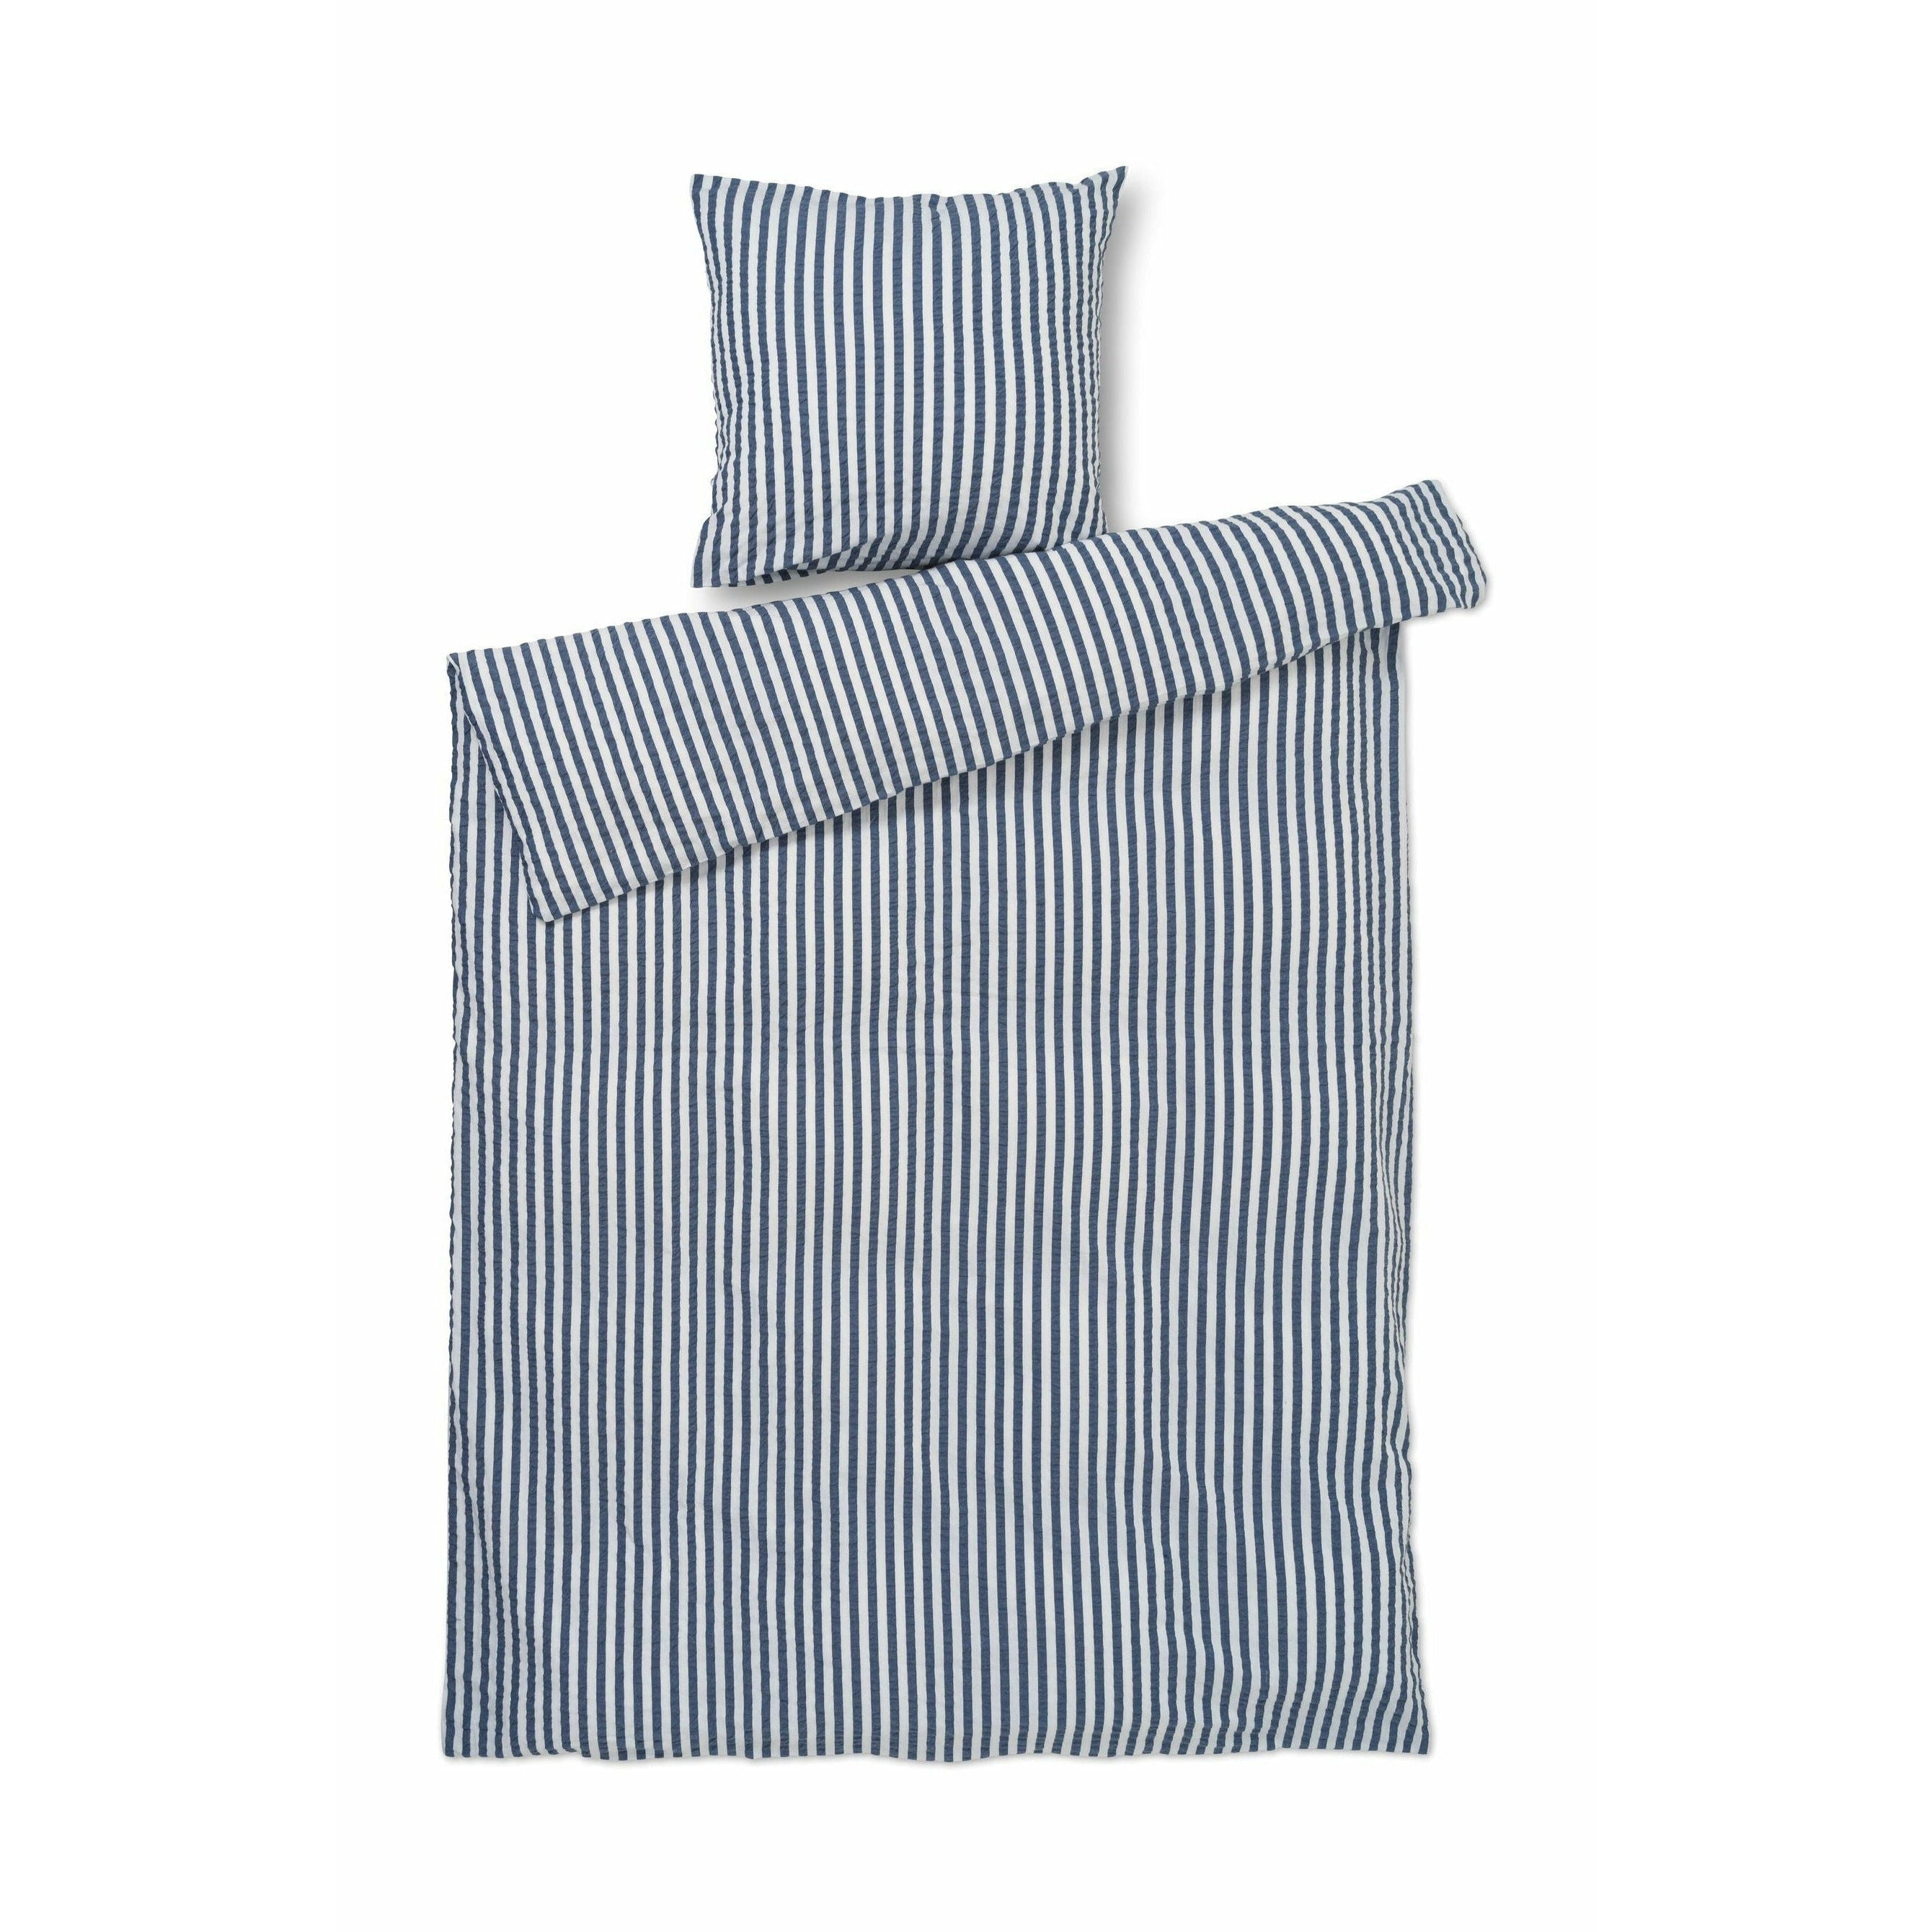 Juna Bæk & Bølge linjer sängkläder 140x220 cm, mörkblå/vit